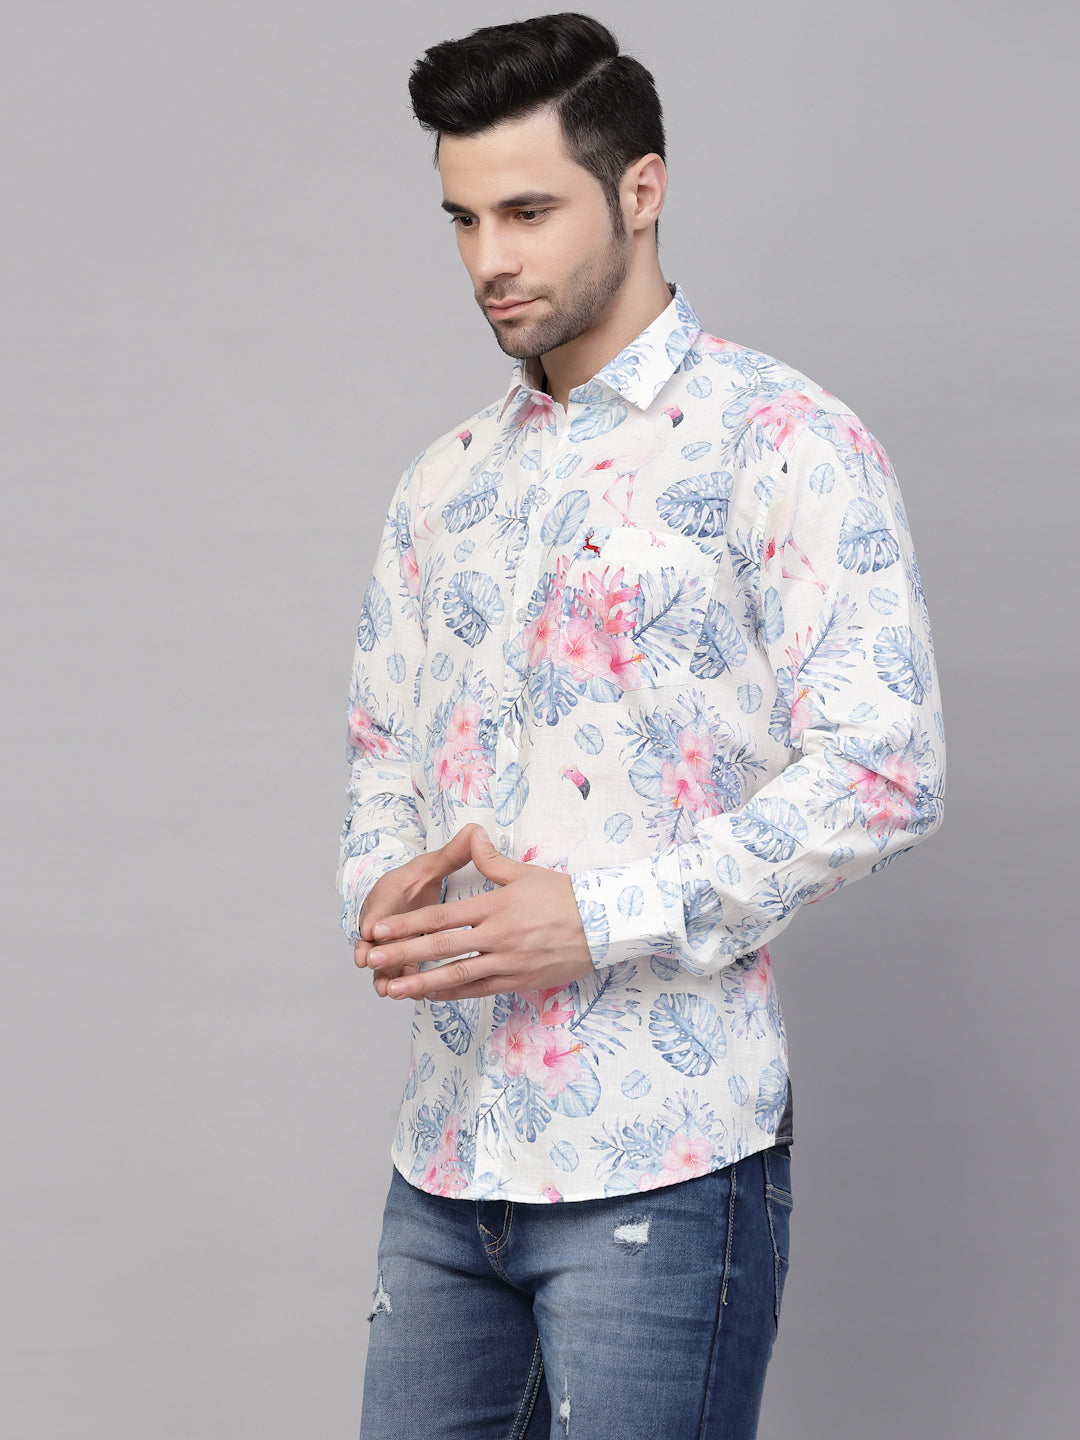 Valbone Men’s Digital Print Floral Printed Pure Cotton Casual Full Sleeves Shirt